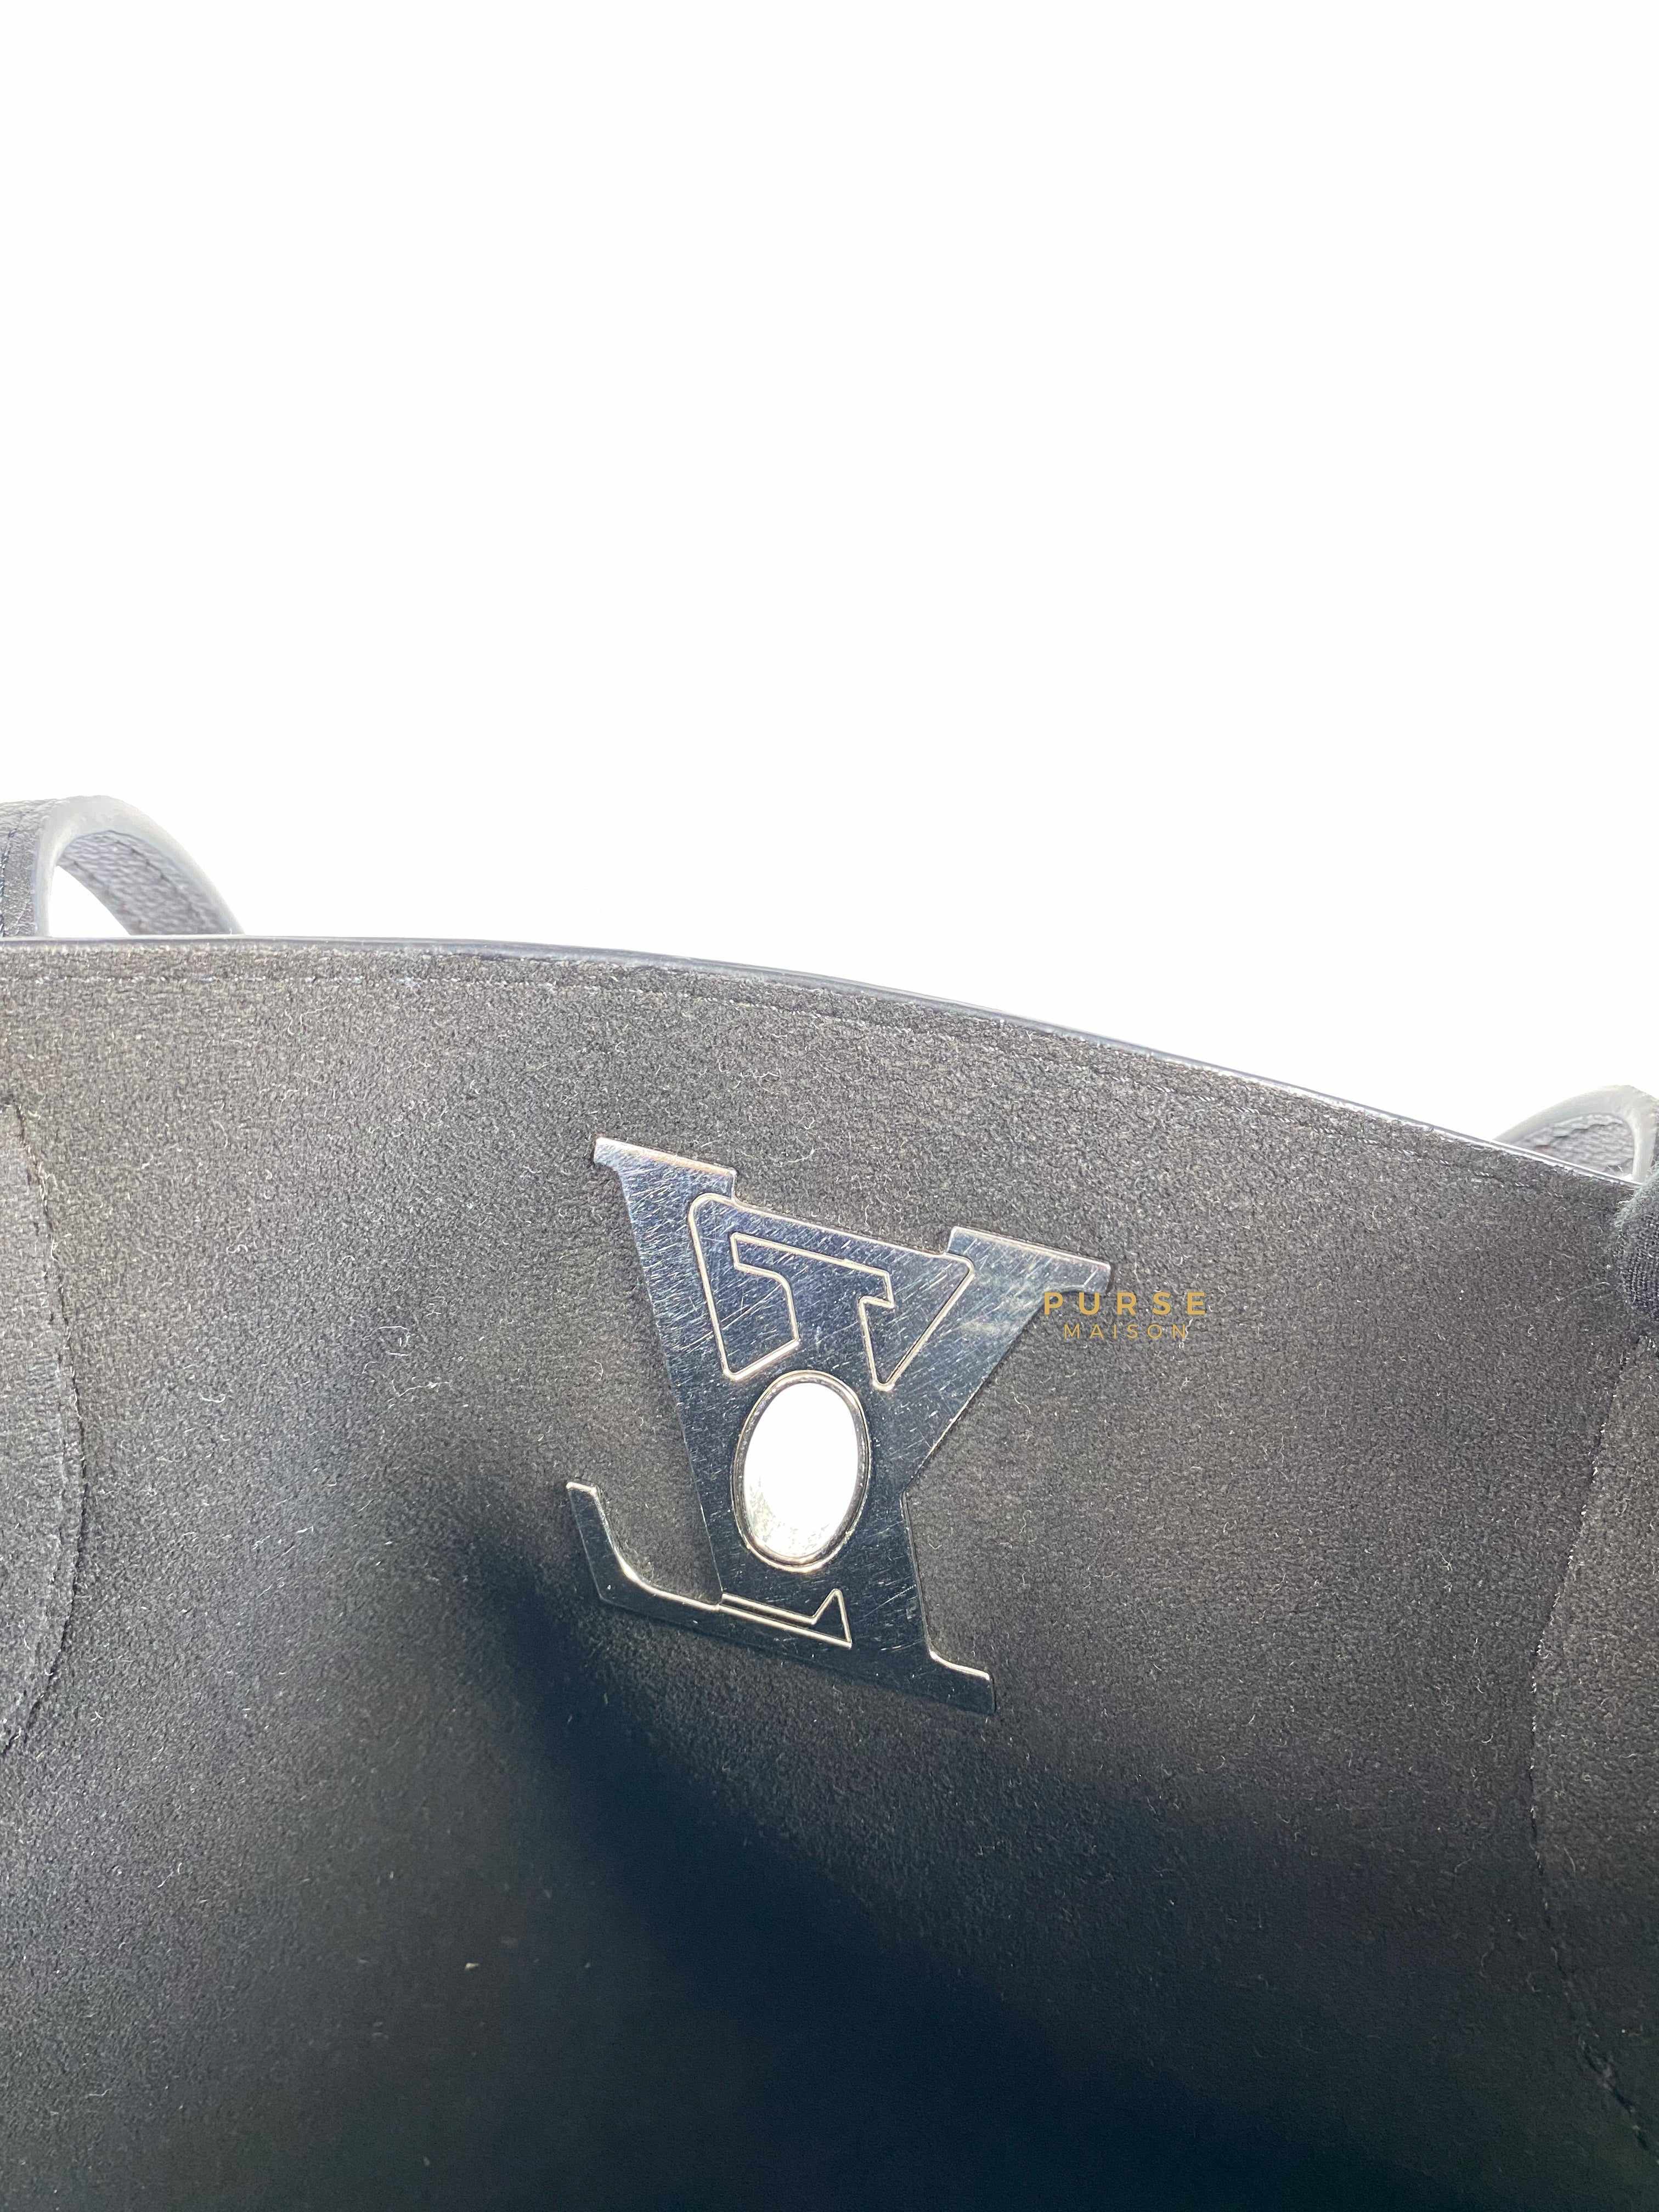 Louis Vuitton Lockme Go Tote in Black Leather (Date code: FL0220)